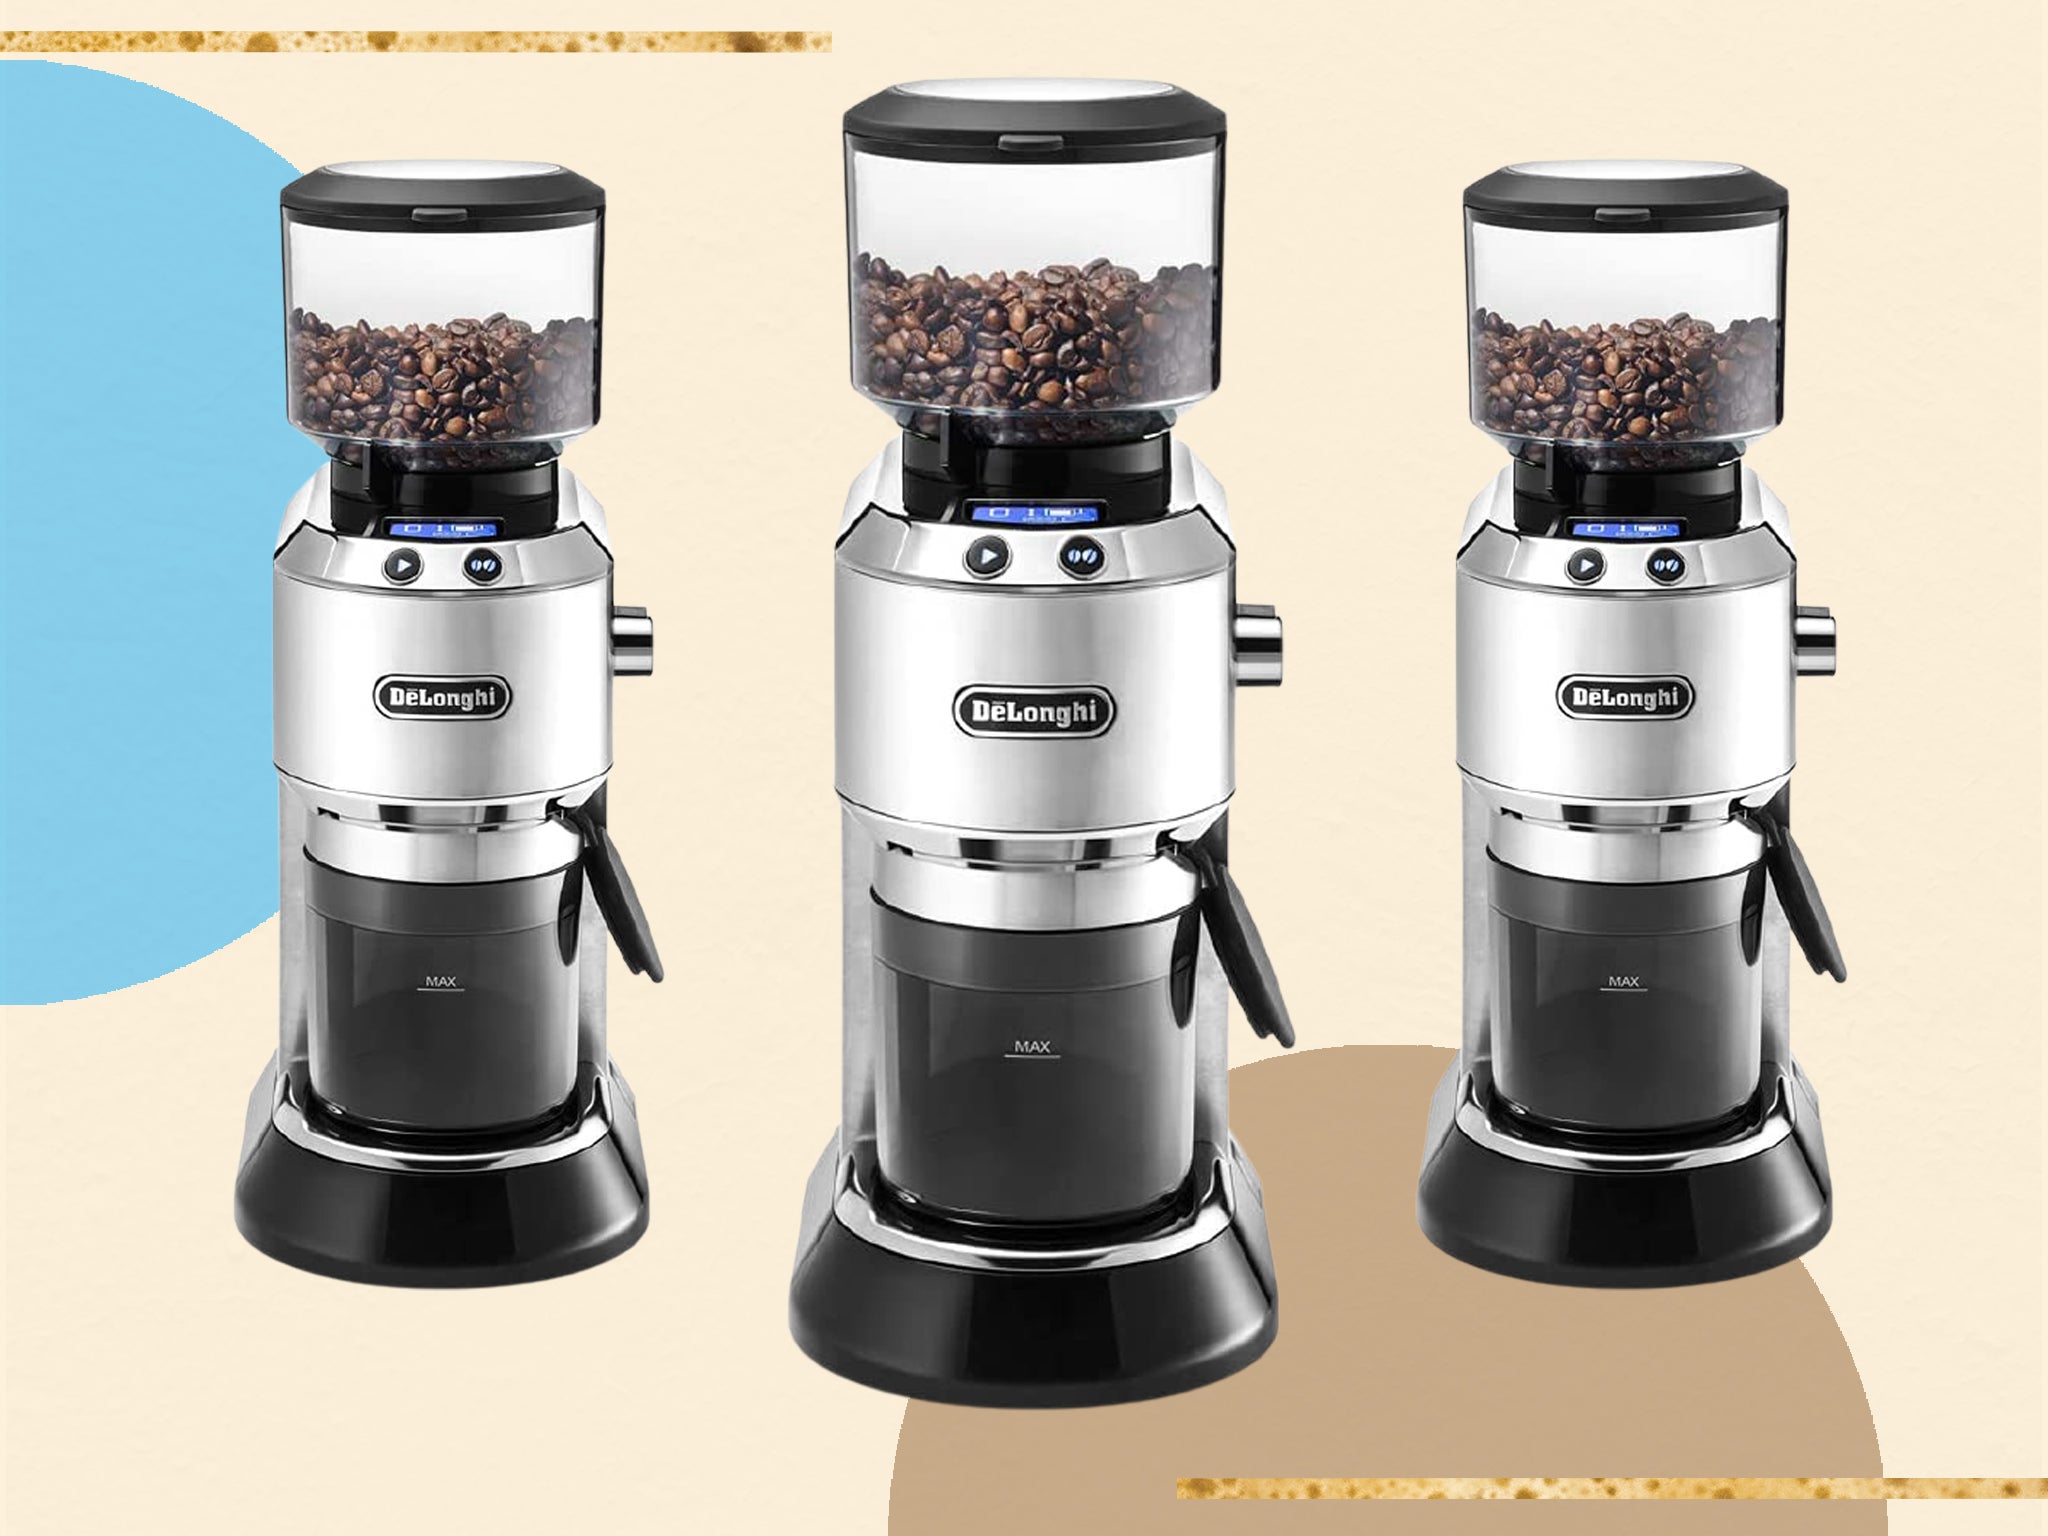 De'Longhi dedica coffee grinder review: Burr blades for fine